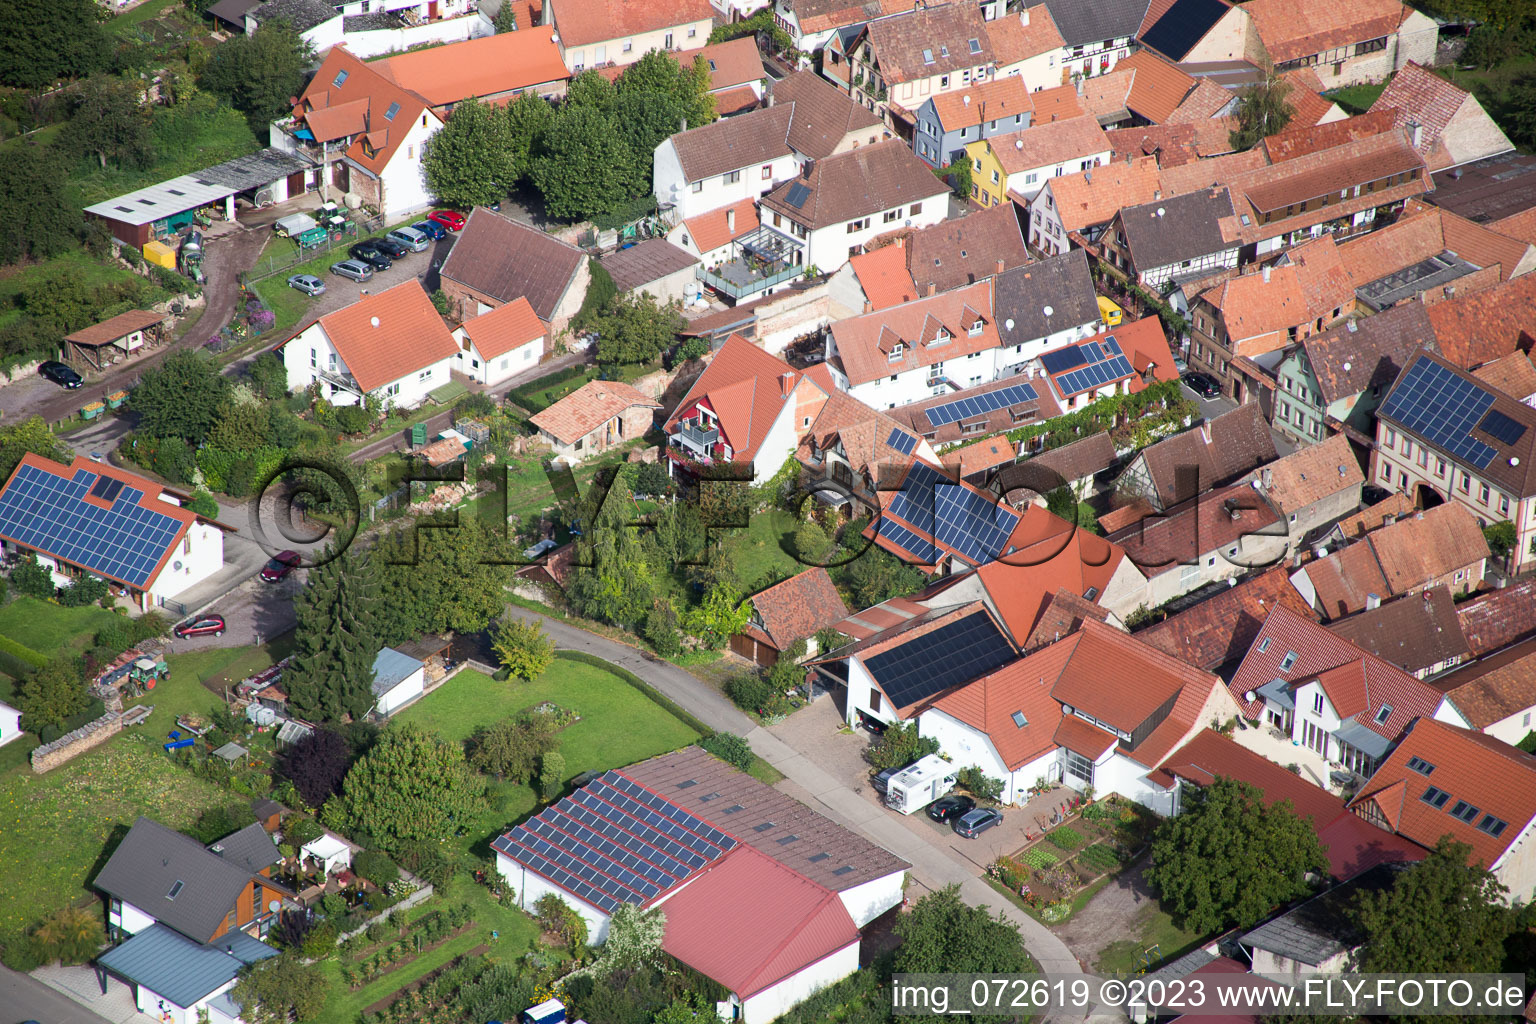 Photographie aérienne de Quartier Heuchelheim in Heuchelheim-Klingen dans le département Rhénanie-Palatinat, Allemagne